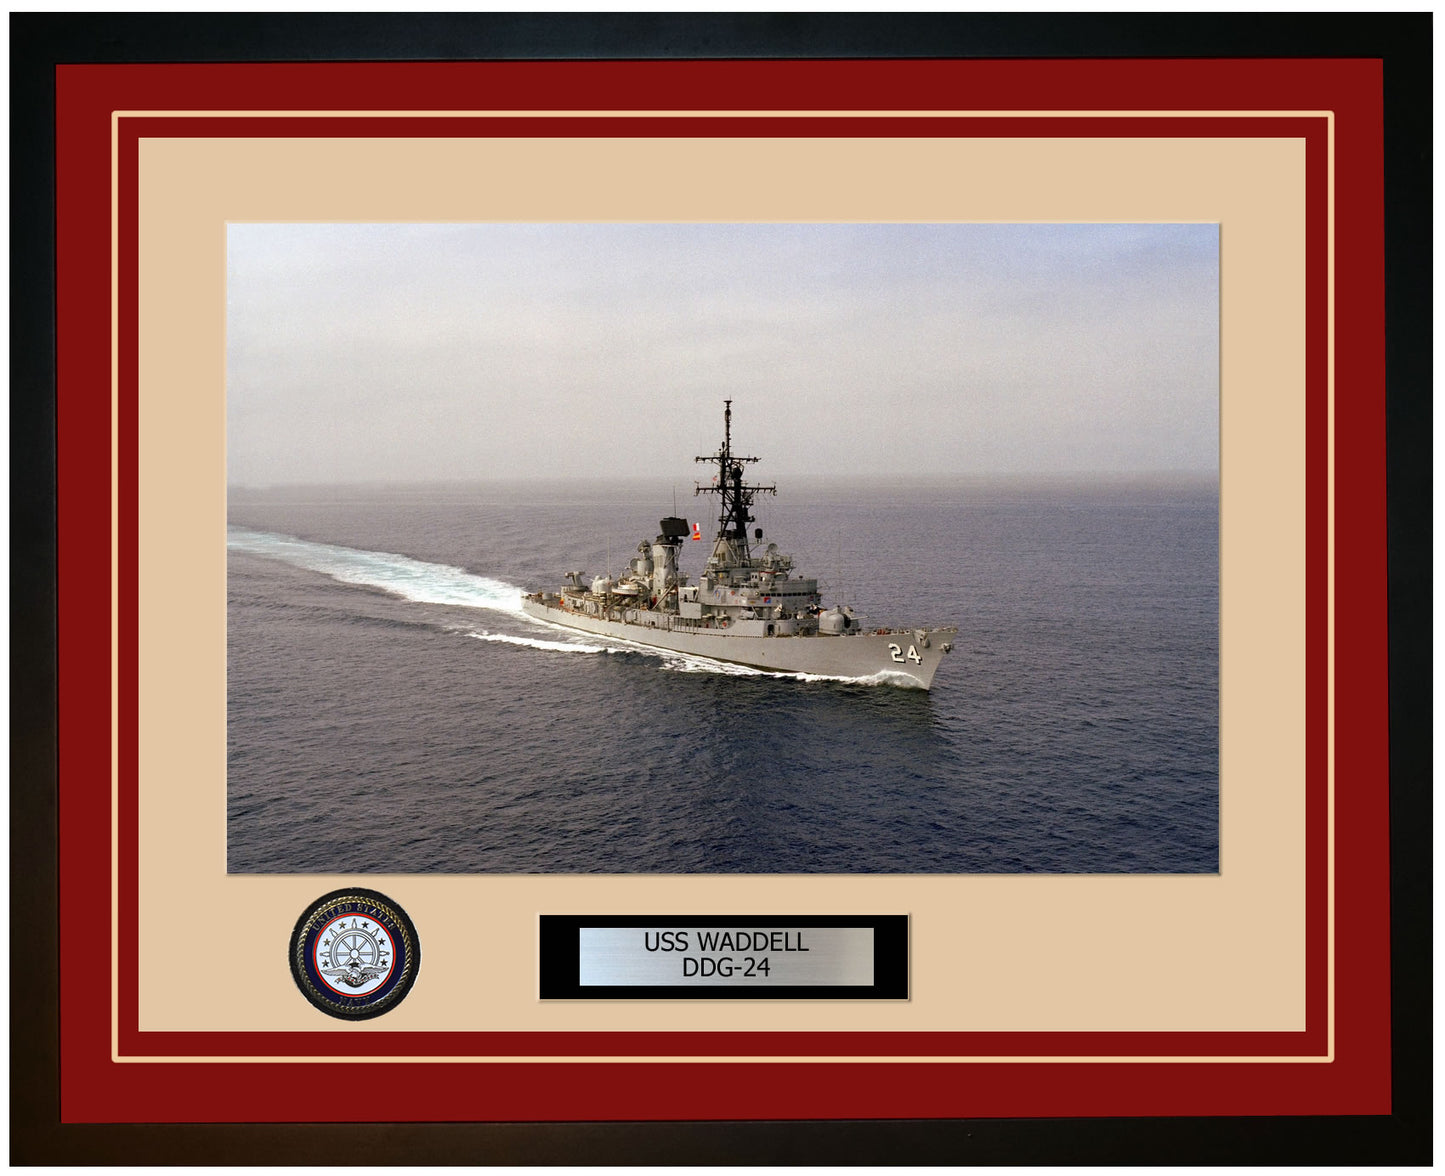 USS WADDELL DDG-24 Framed Navy Ship Photo Burgundy